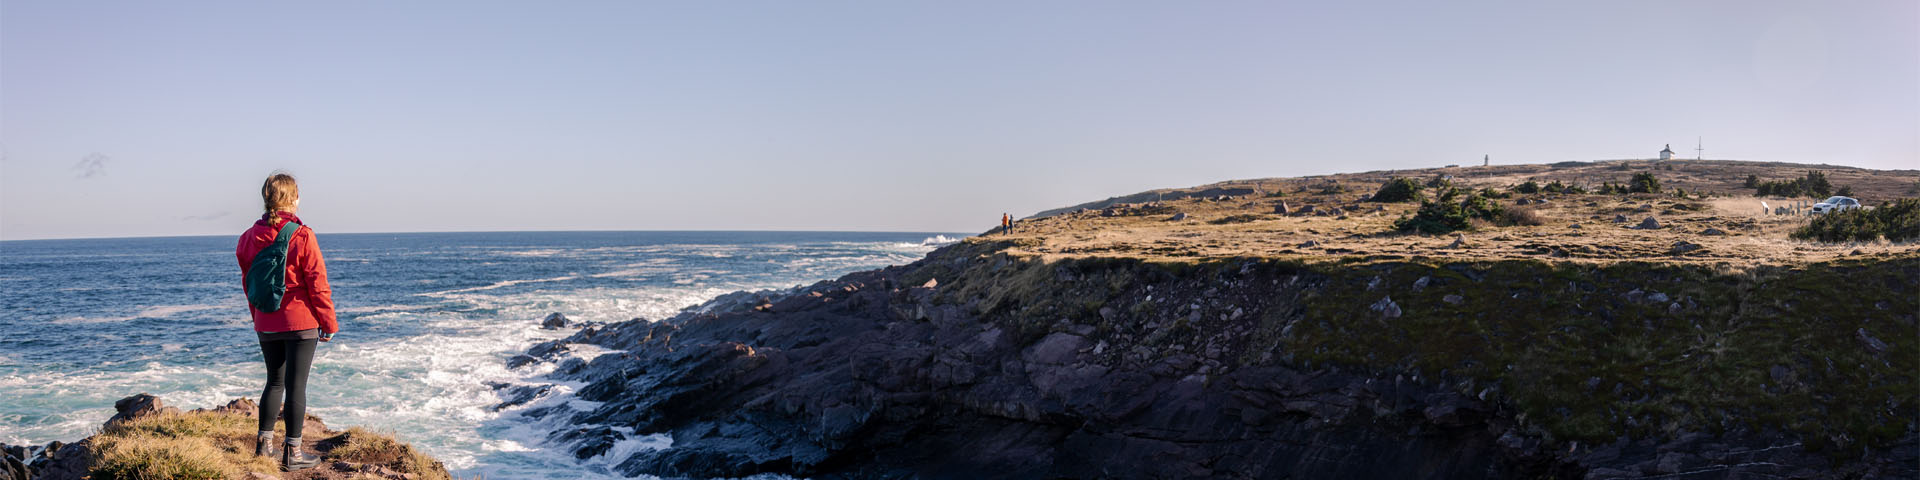 un individu debout sur un sentier côtier surplombant l'océan